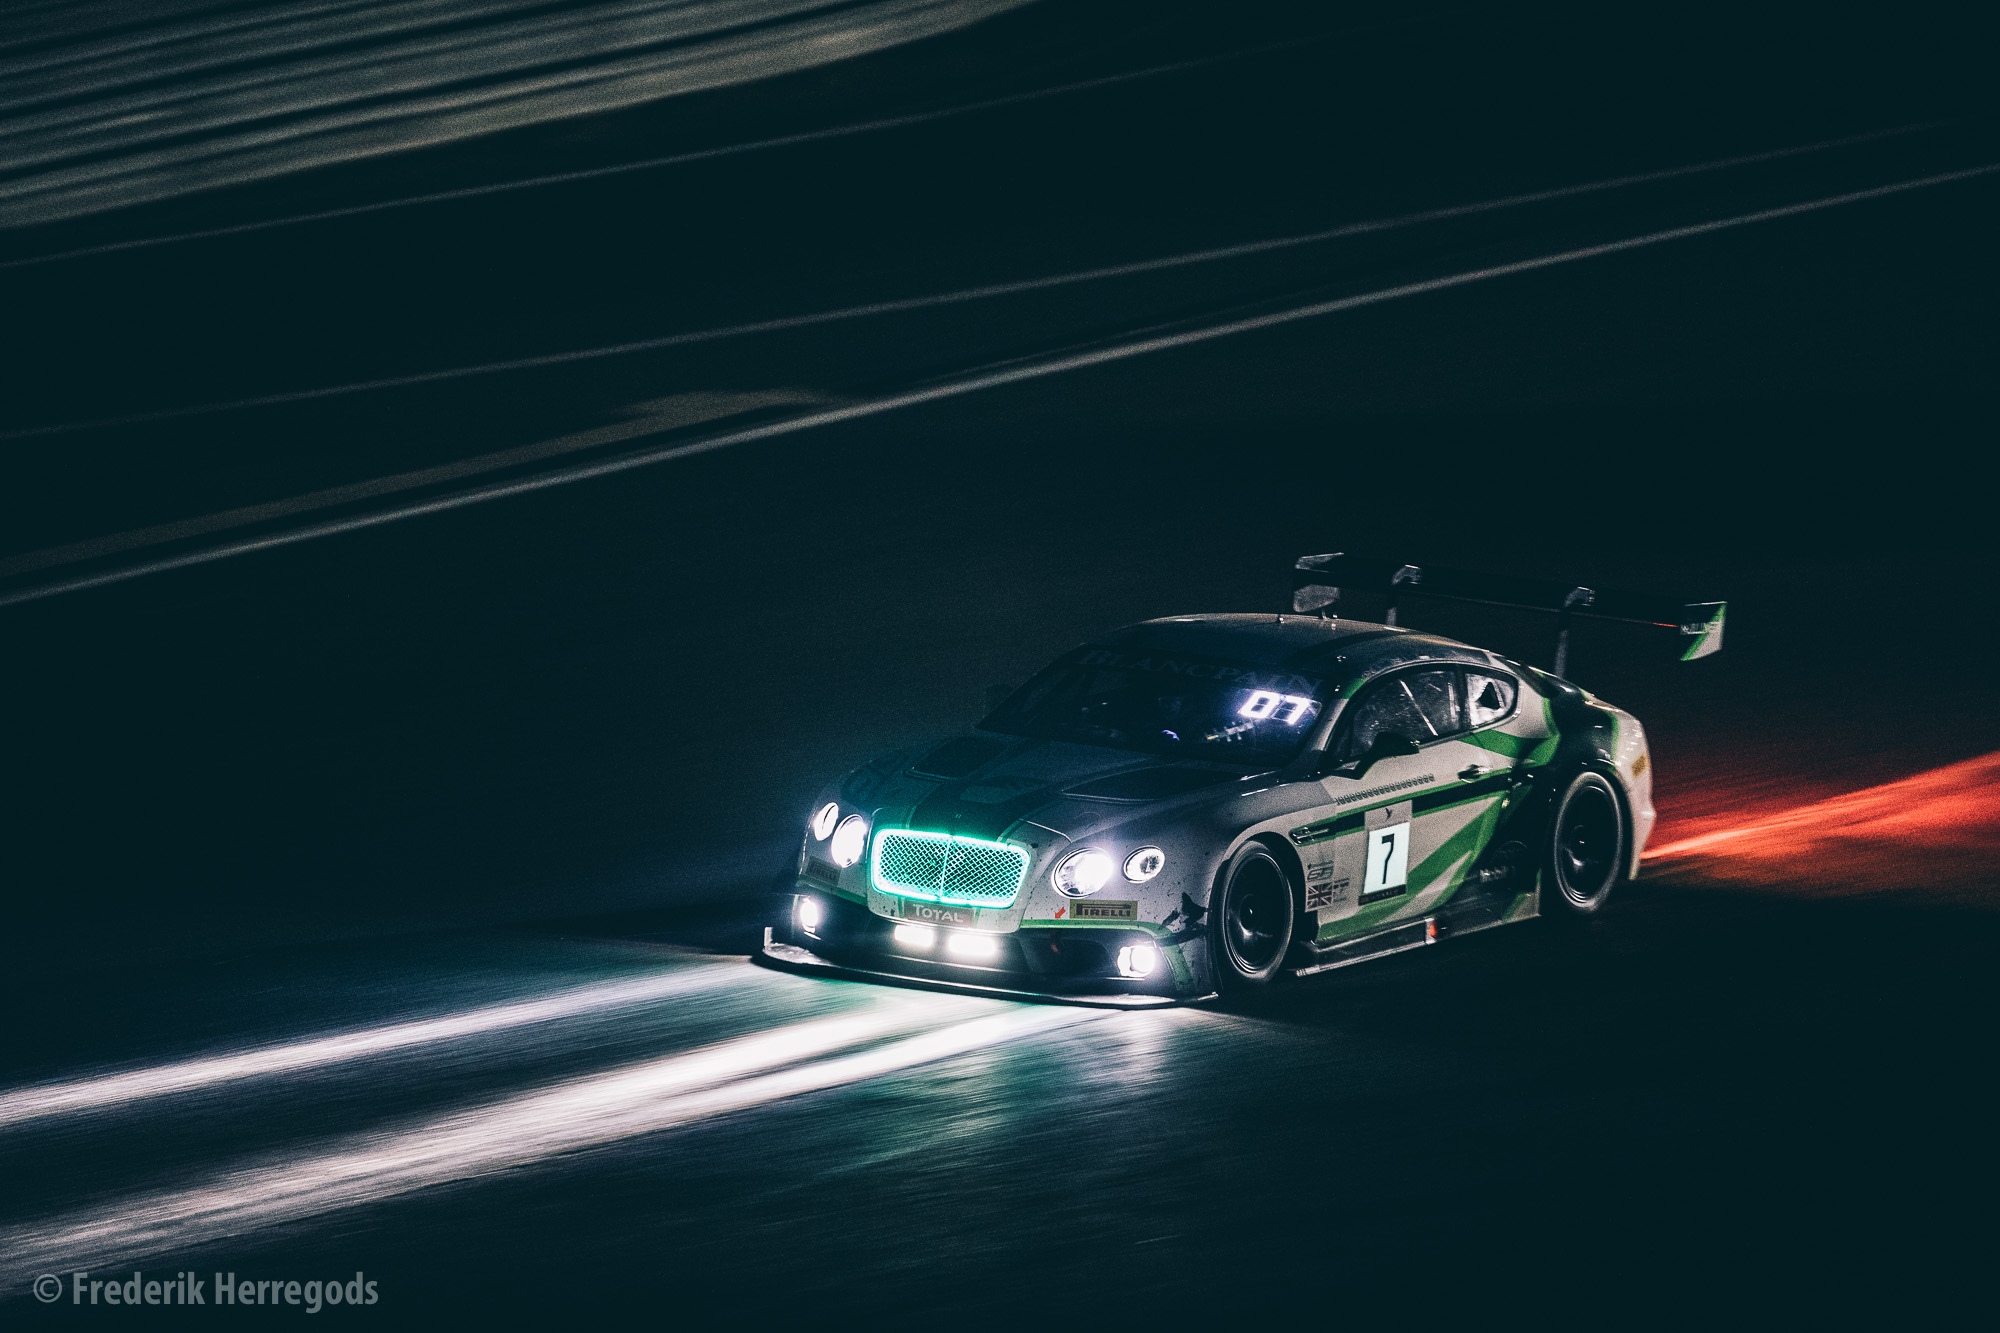 #Spa24: Racing through the night